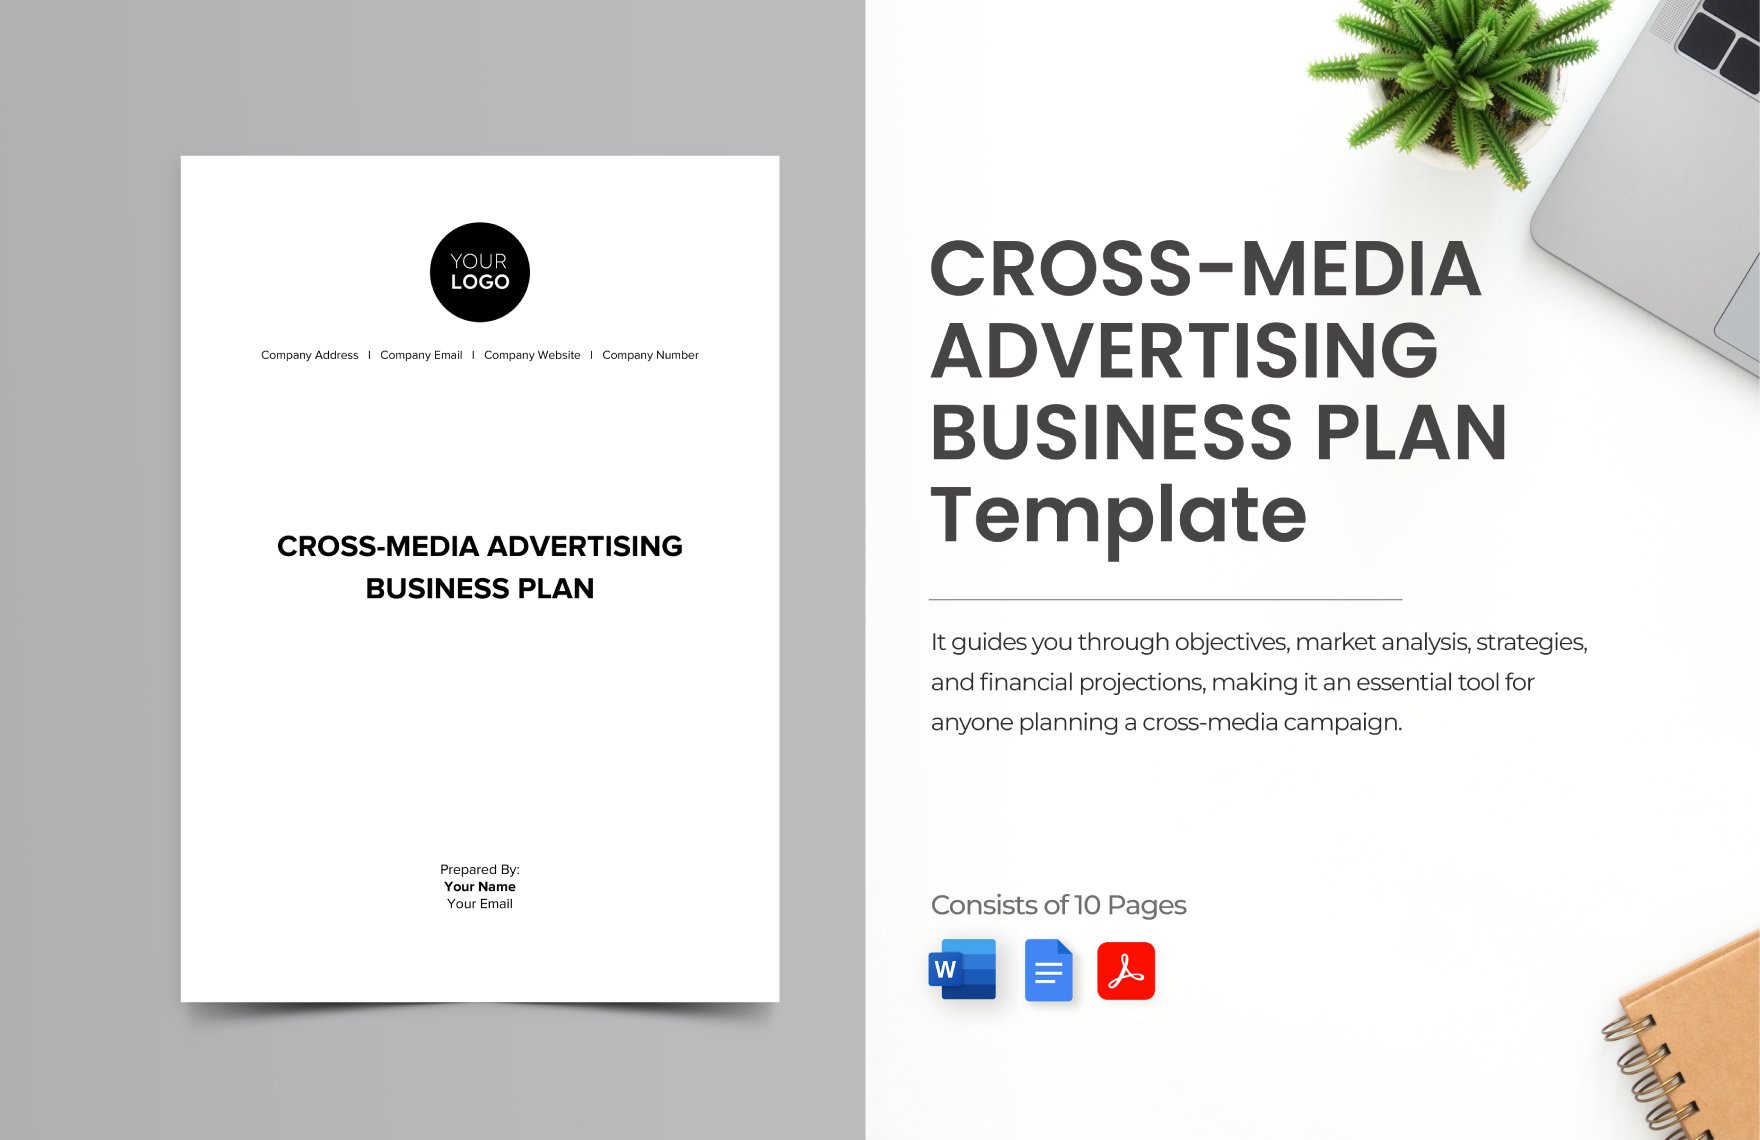 Cross-Media Advertising Business Plan Template